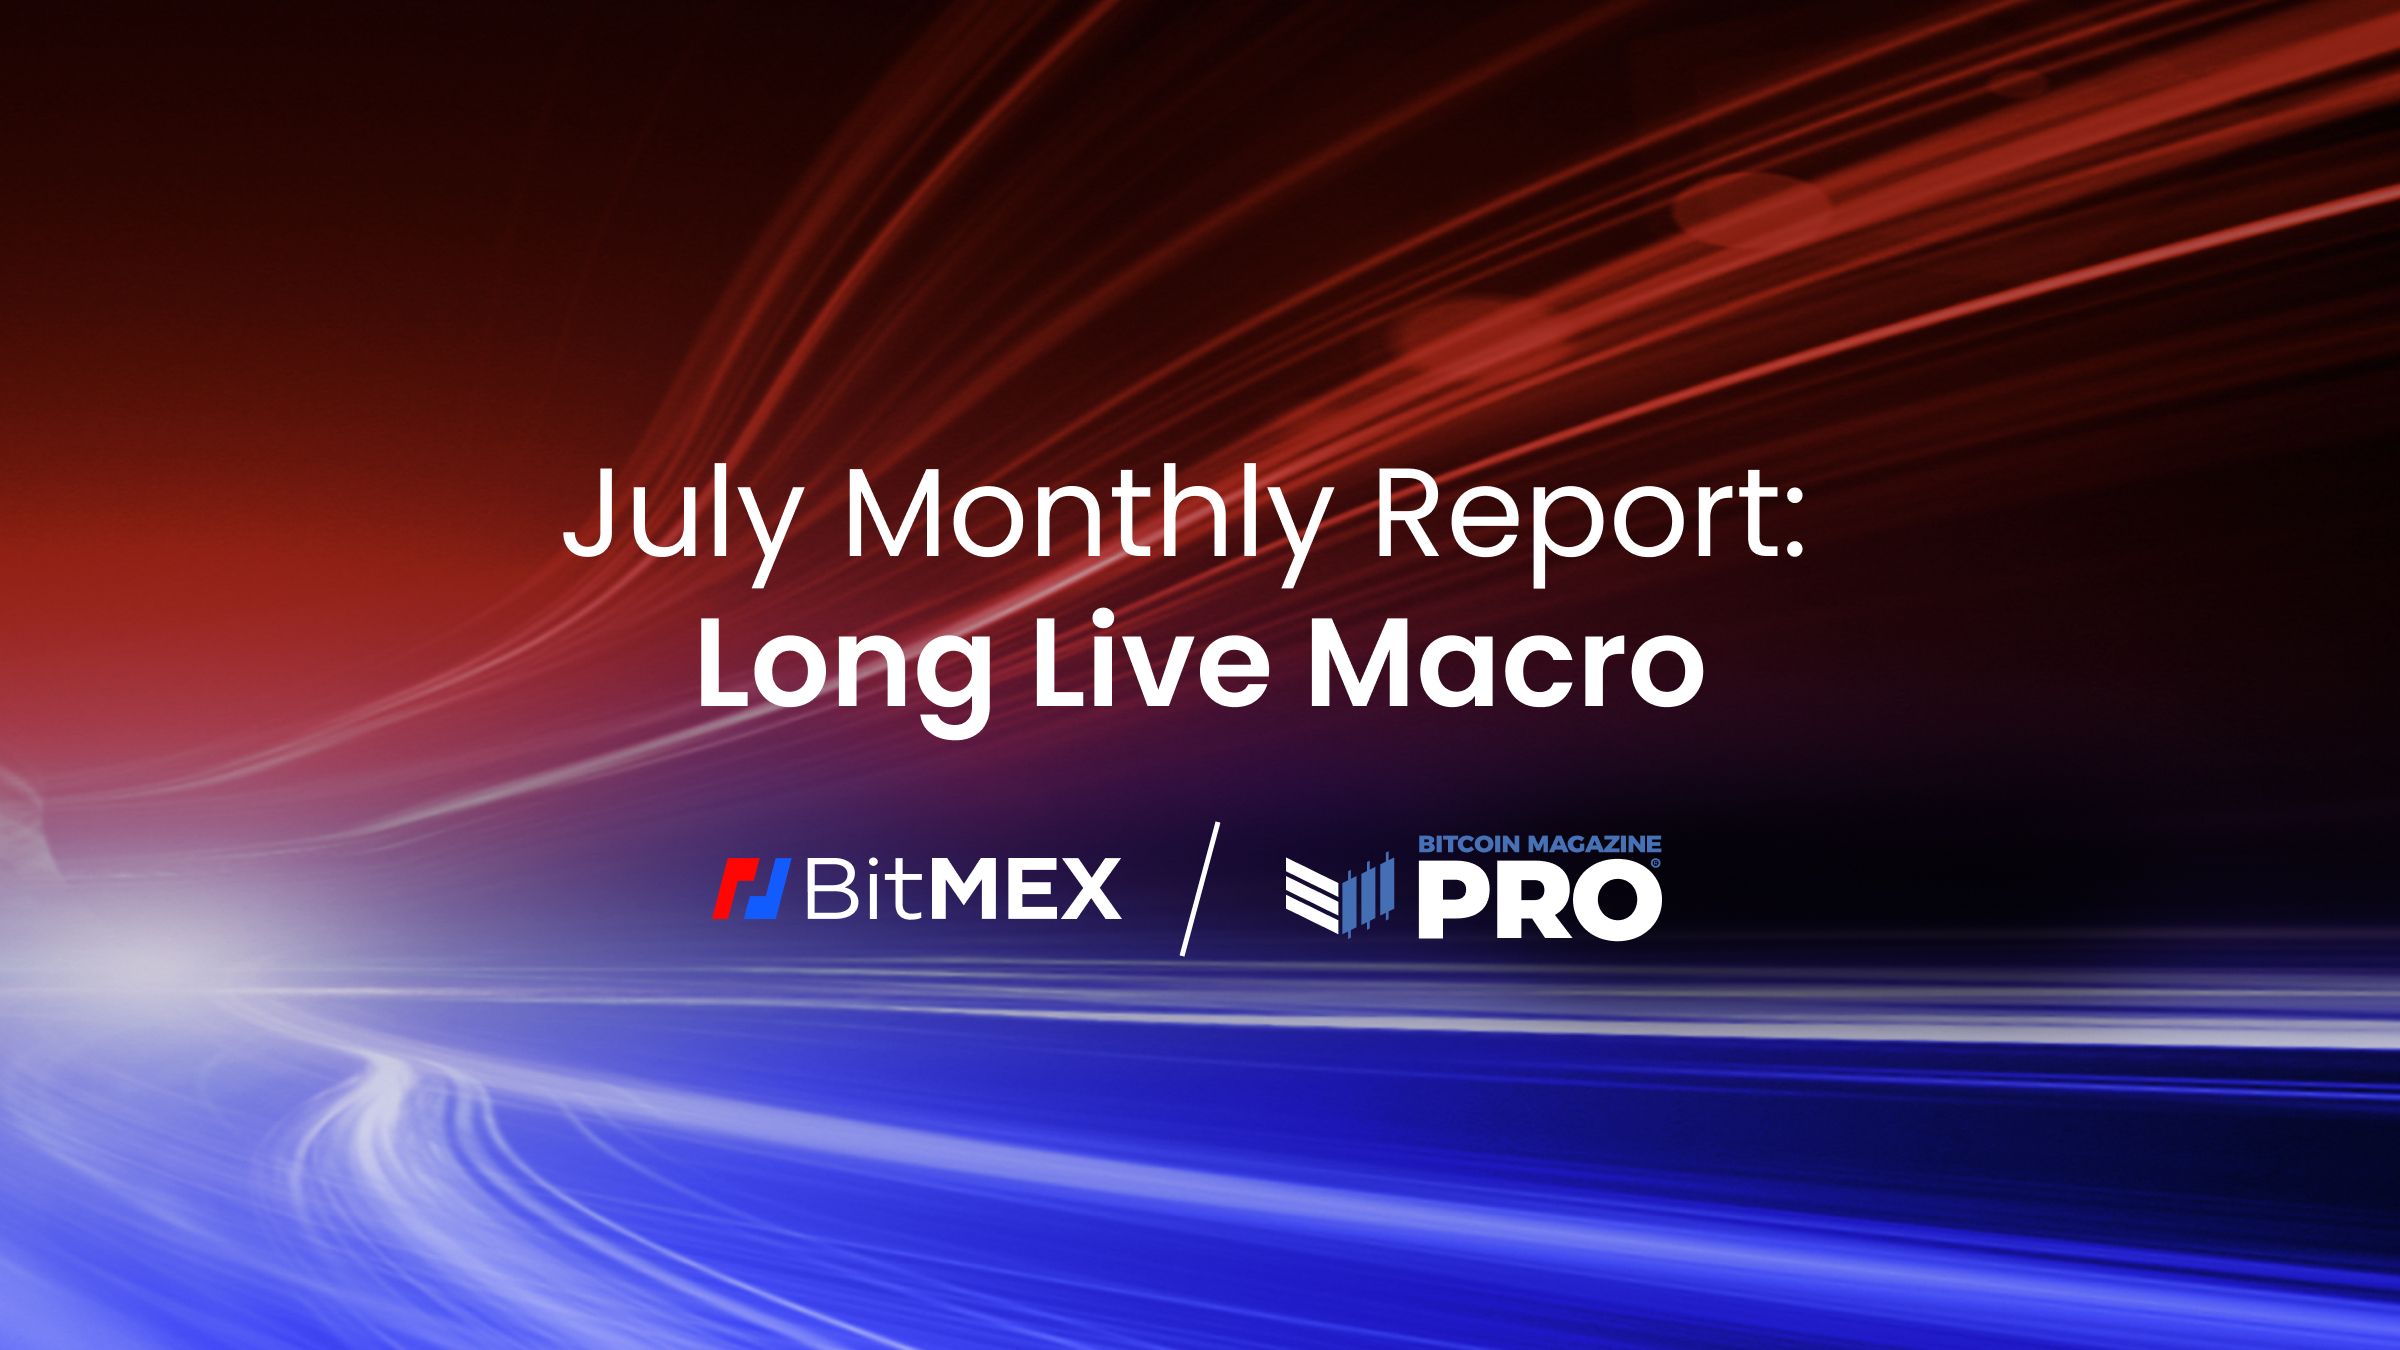 Introducing Bitcoin Magazine Pro’s “Long Live Macro Report”, Sponsored by BitMEX